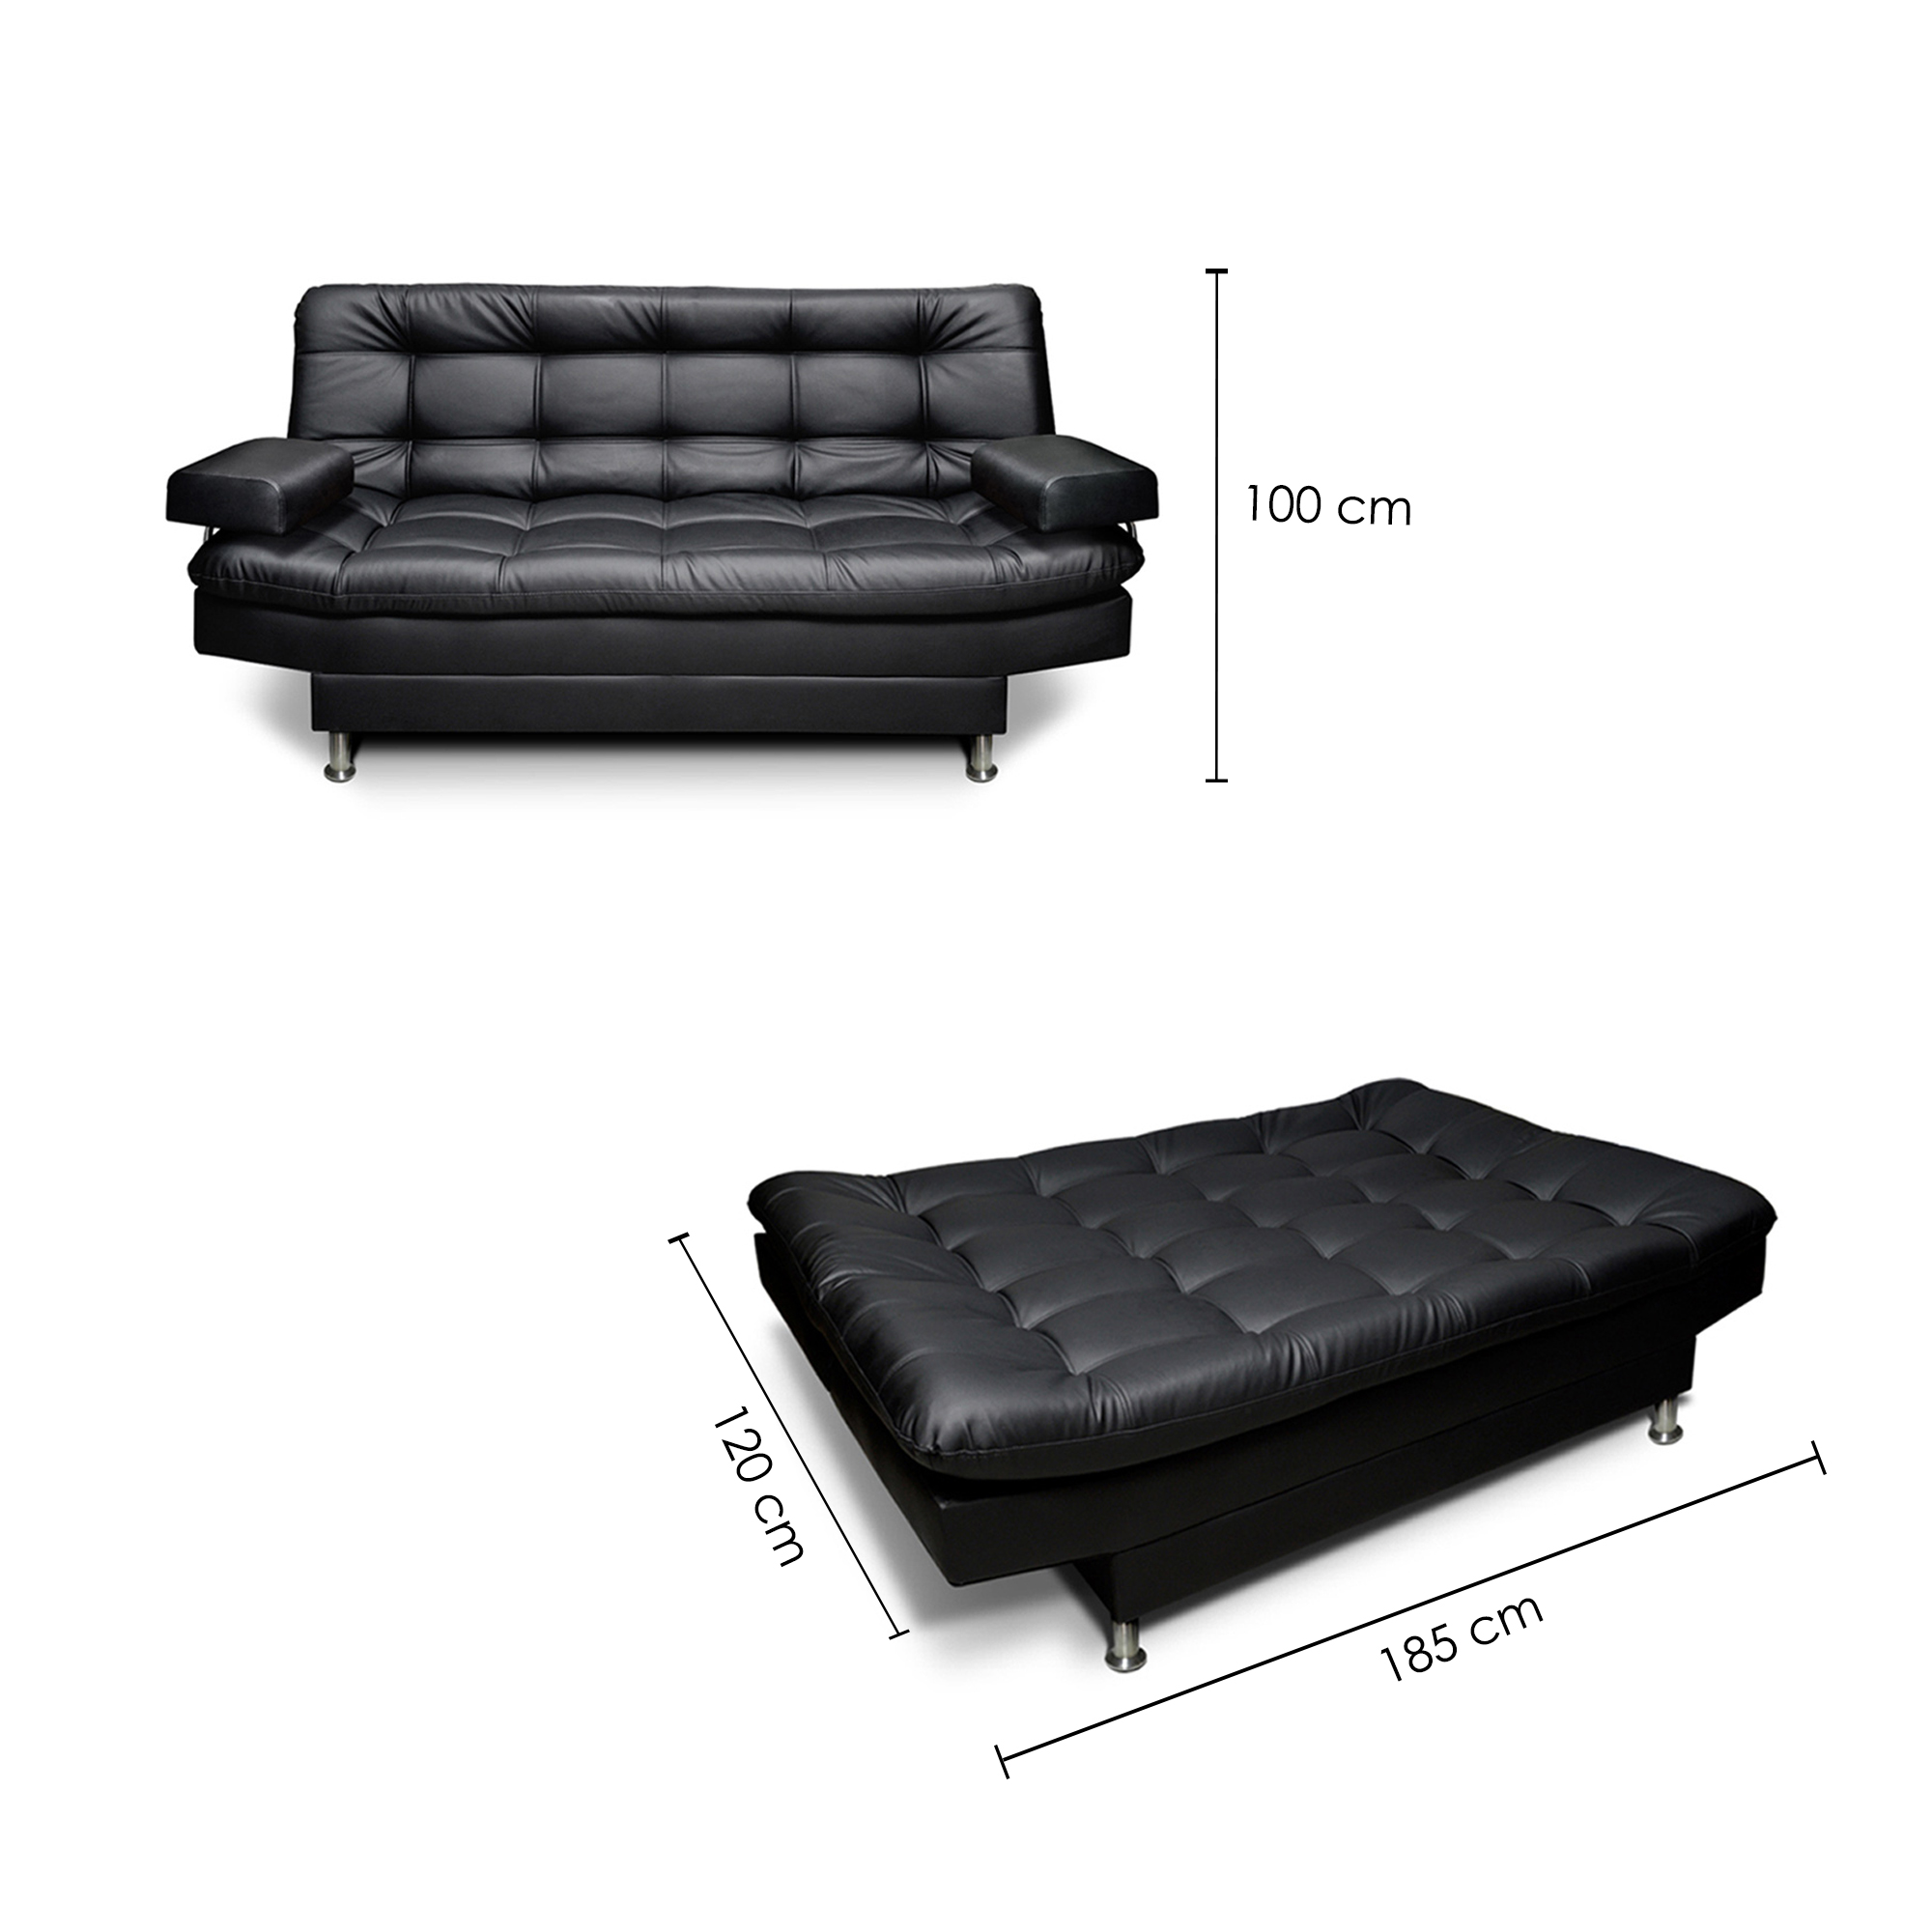 Sofa Cama Imperial Color Negro